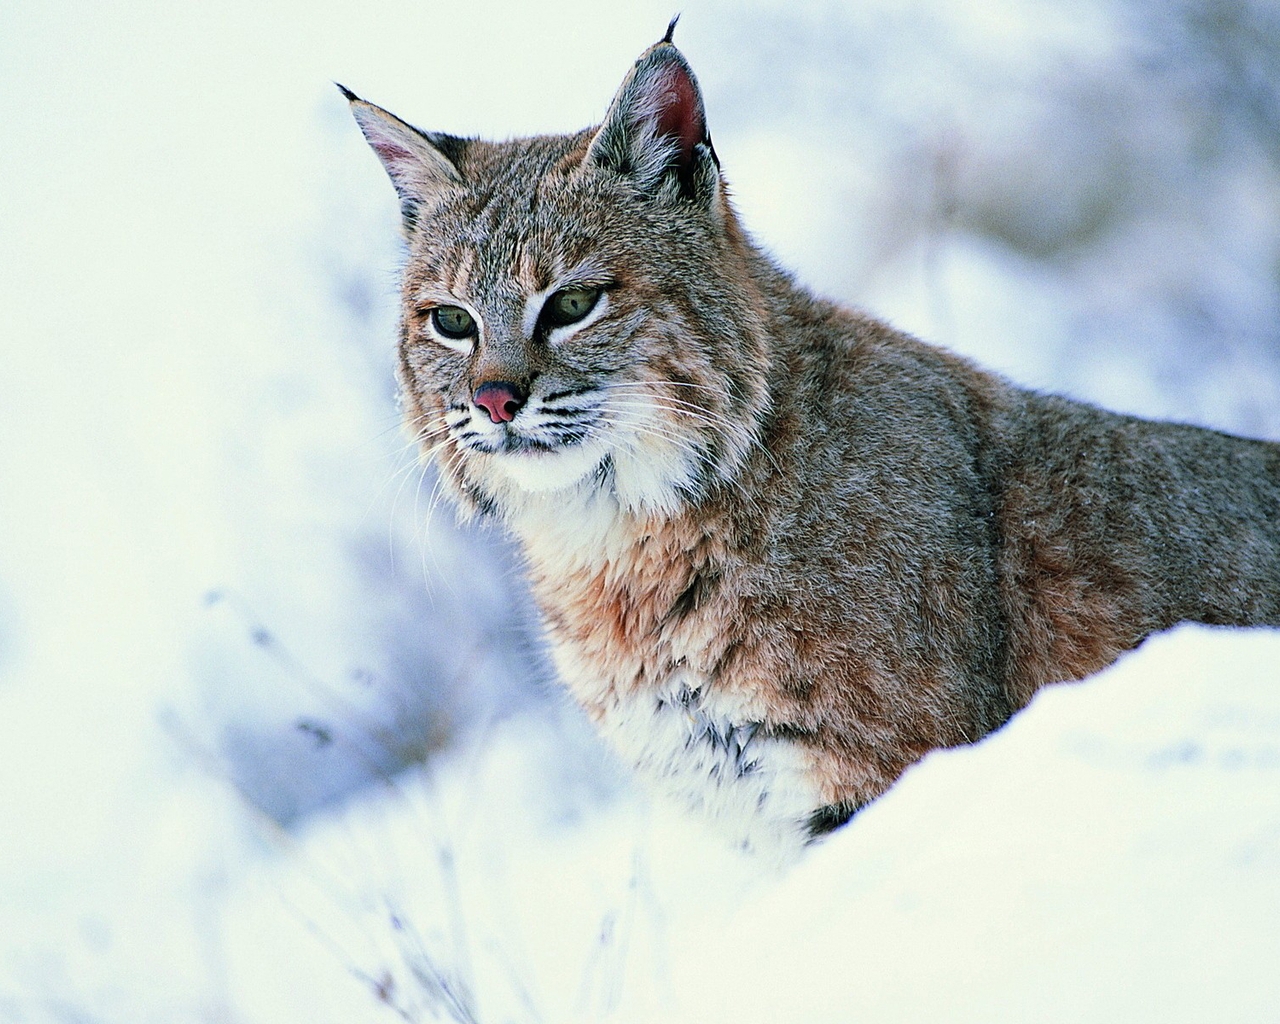 Image: Lynx, winter, snow